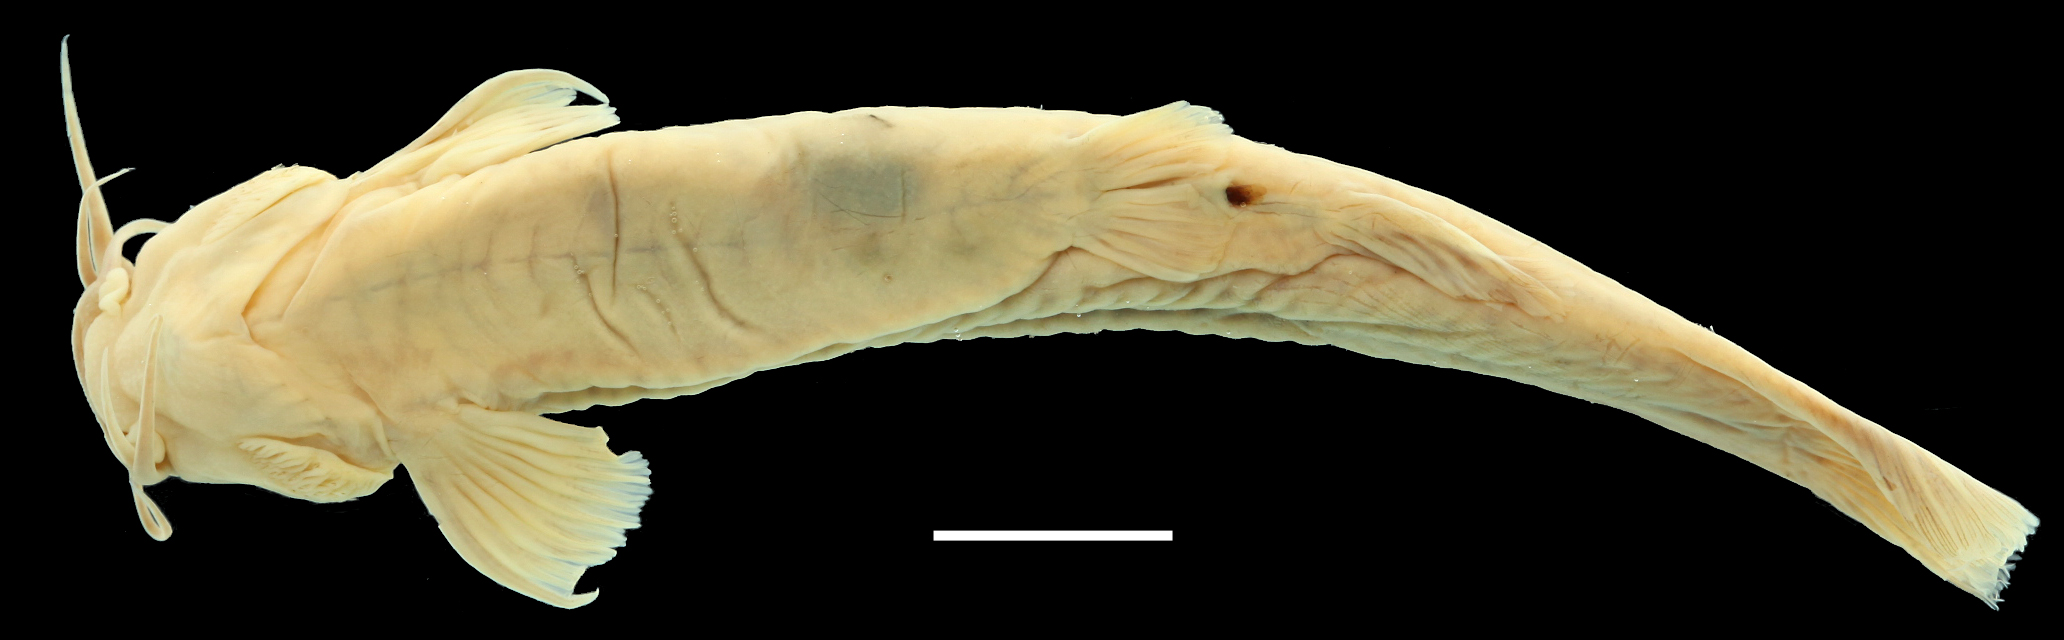 Paratype of <em>Trichomycterus cachiraensis</em>, IAvH-P-11114_Ventral, 74.4 mm SL (scale bar = 1 cm). Photograph by C. DoNascimiento